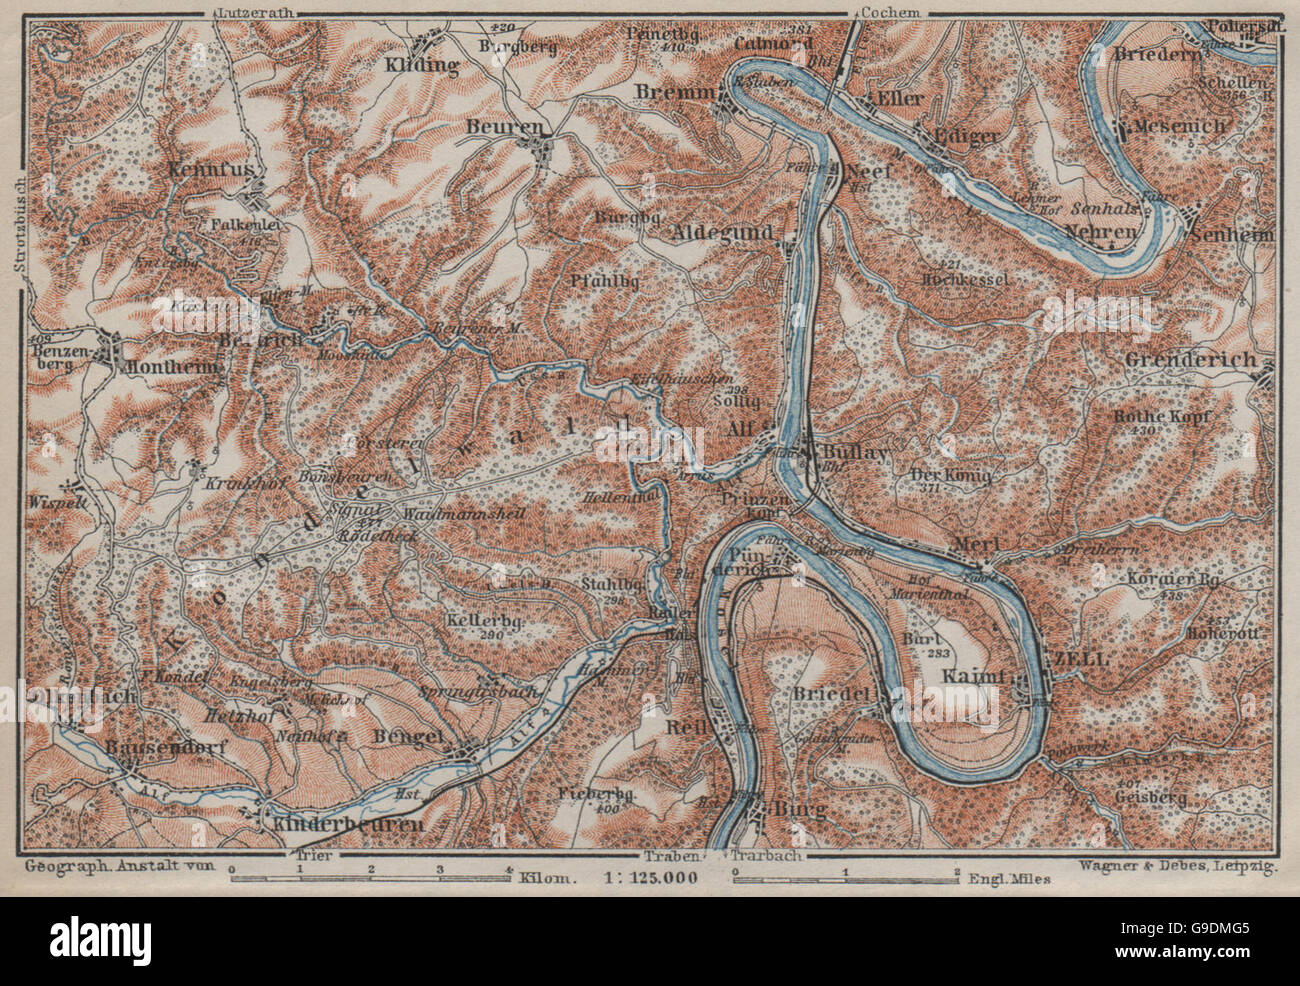 MOSEL. Zeller Hamm. Alf Kondelwald Moselle Eifel. Rhineland-Palatinate, 1906 map Stock Photo